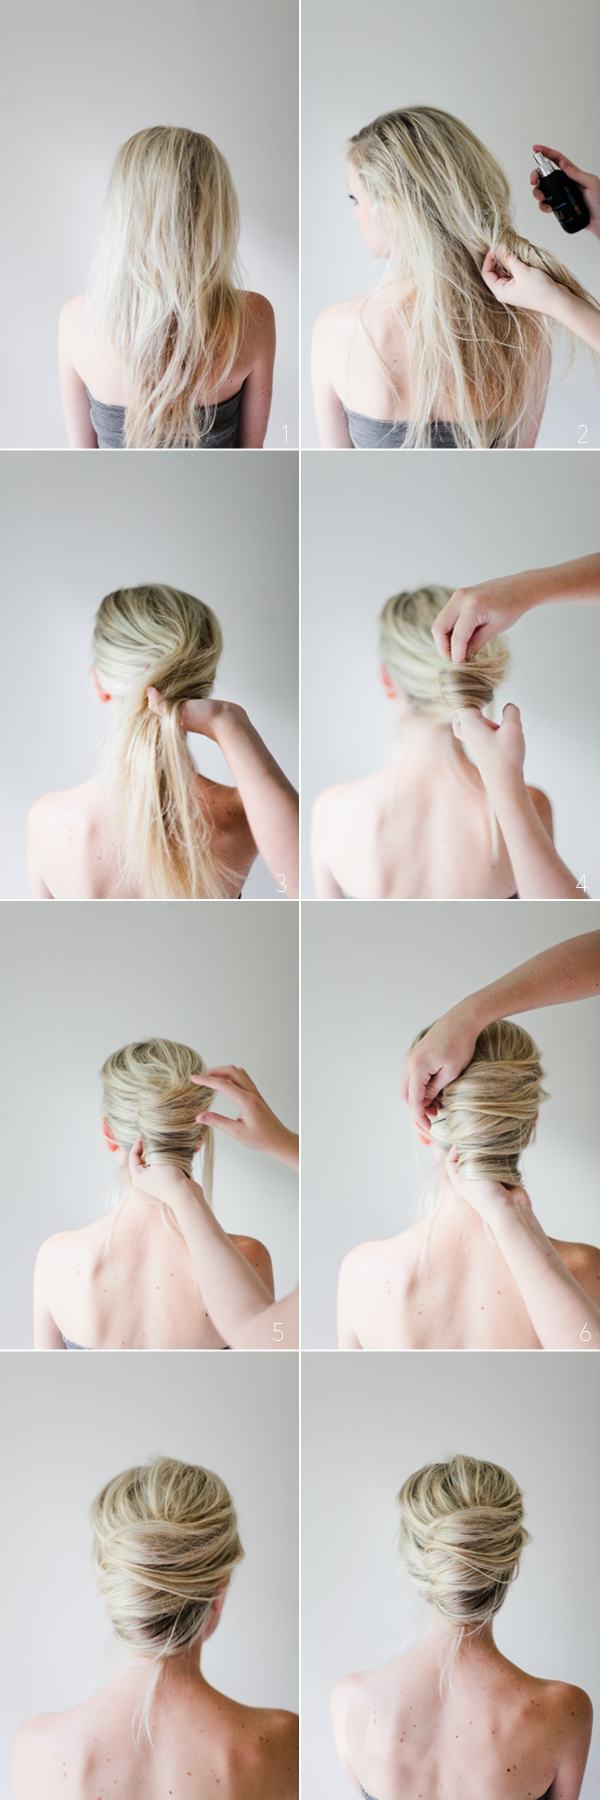 DIY-casual-updo-fransk-twist-hair-banan-pictures-tutorial